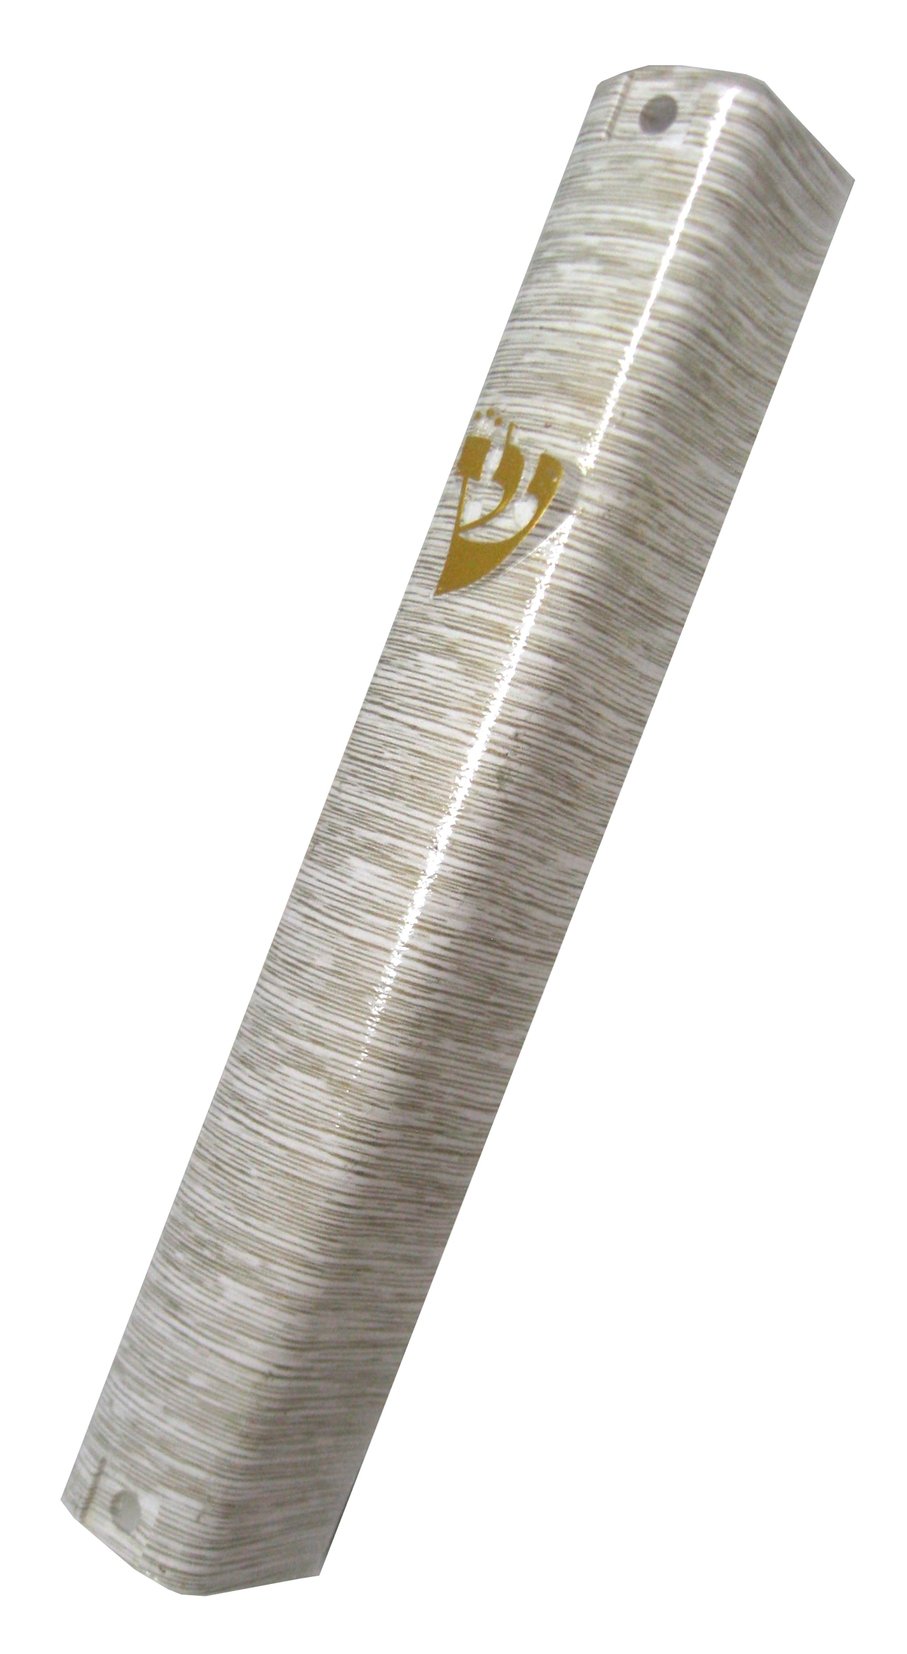 Textured Antique White Mezuzah Case with Gold Shin - 5.9